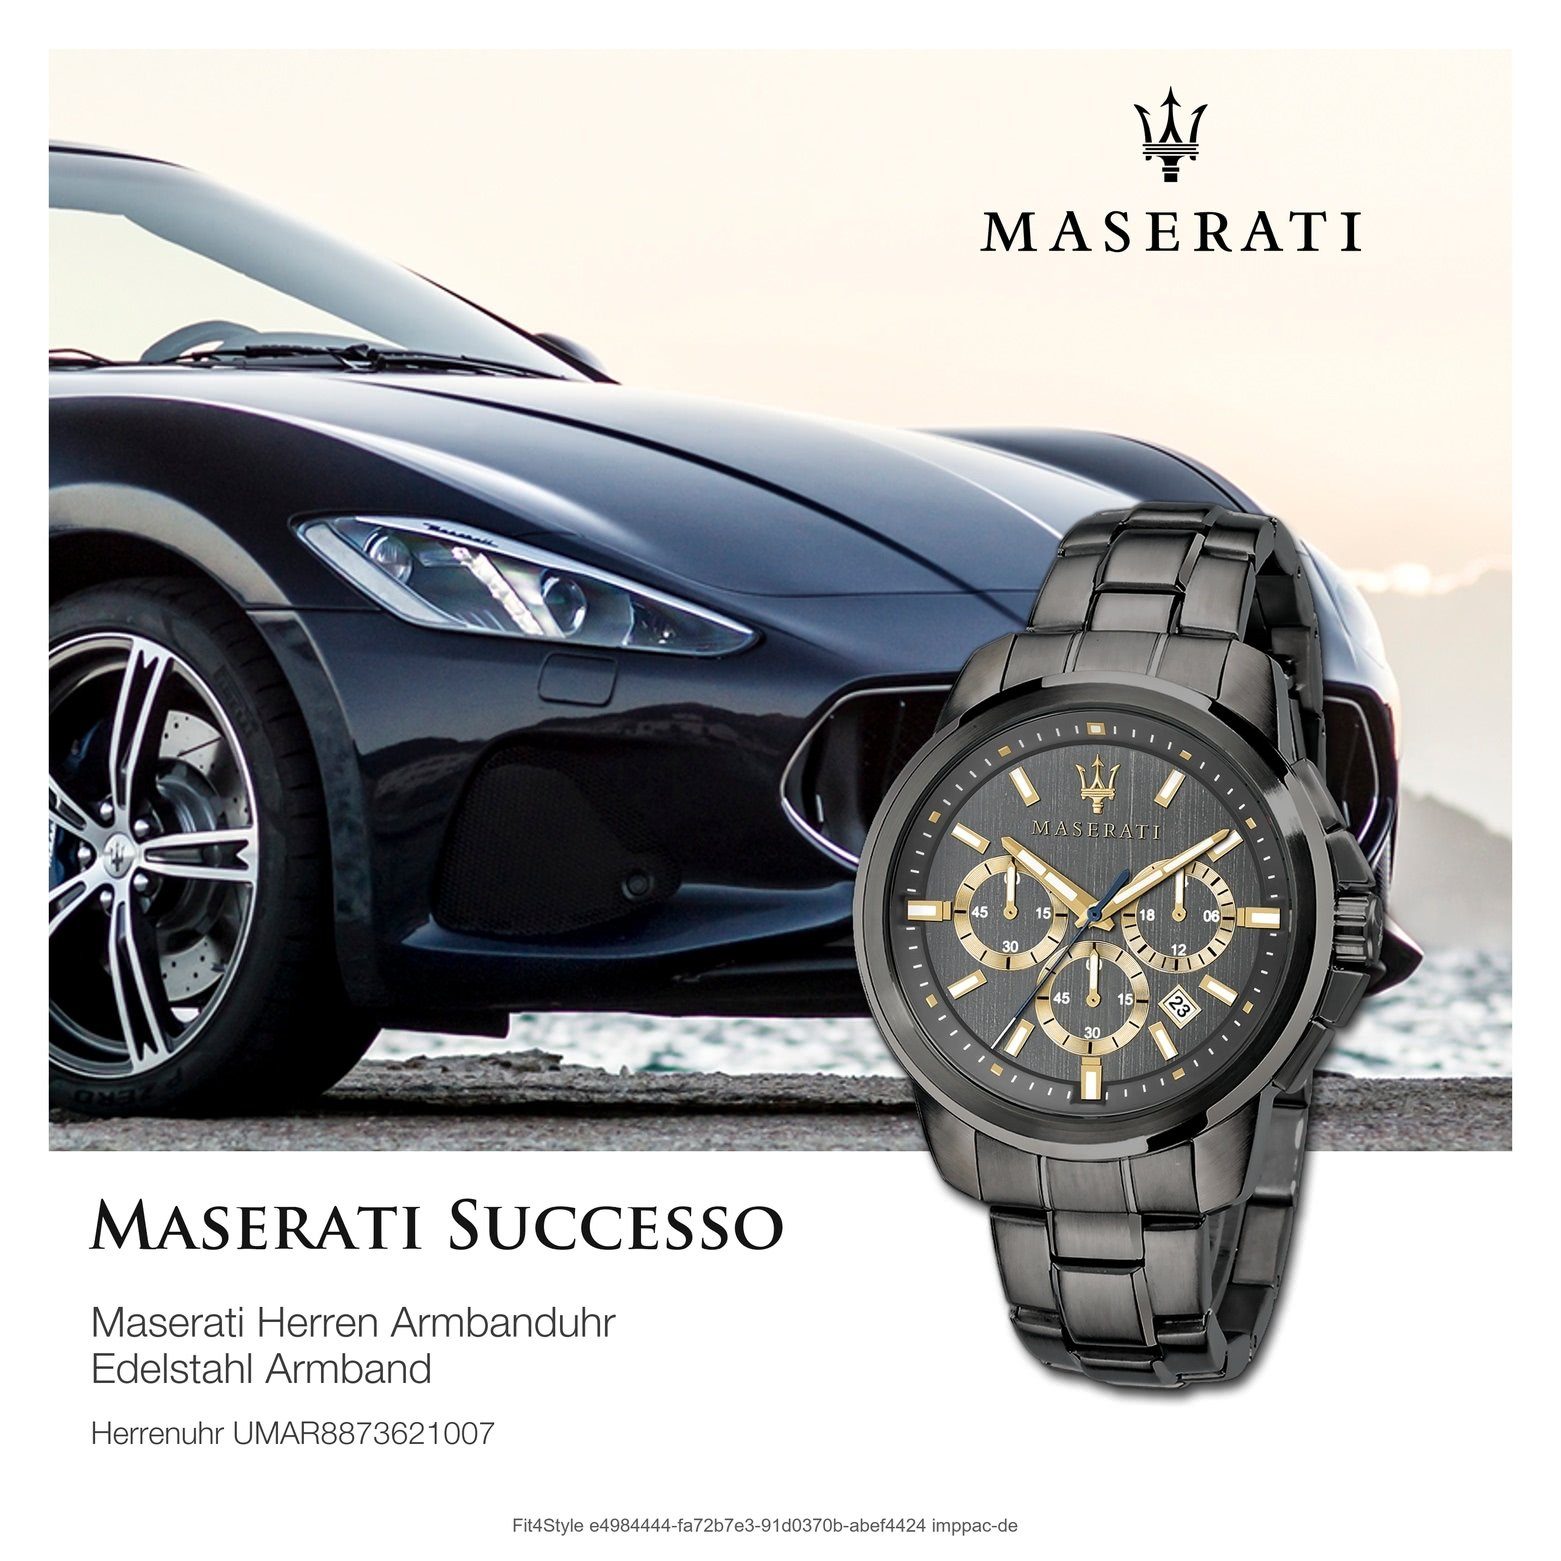 MASERATI Chronograph Maserati Herren Uhr Herrenuhr Chronograph, (ca. Italy Made-In Edelstahlarmband, rund, groß 52x44mm) grau